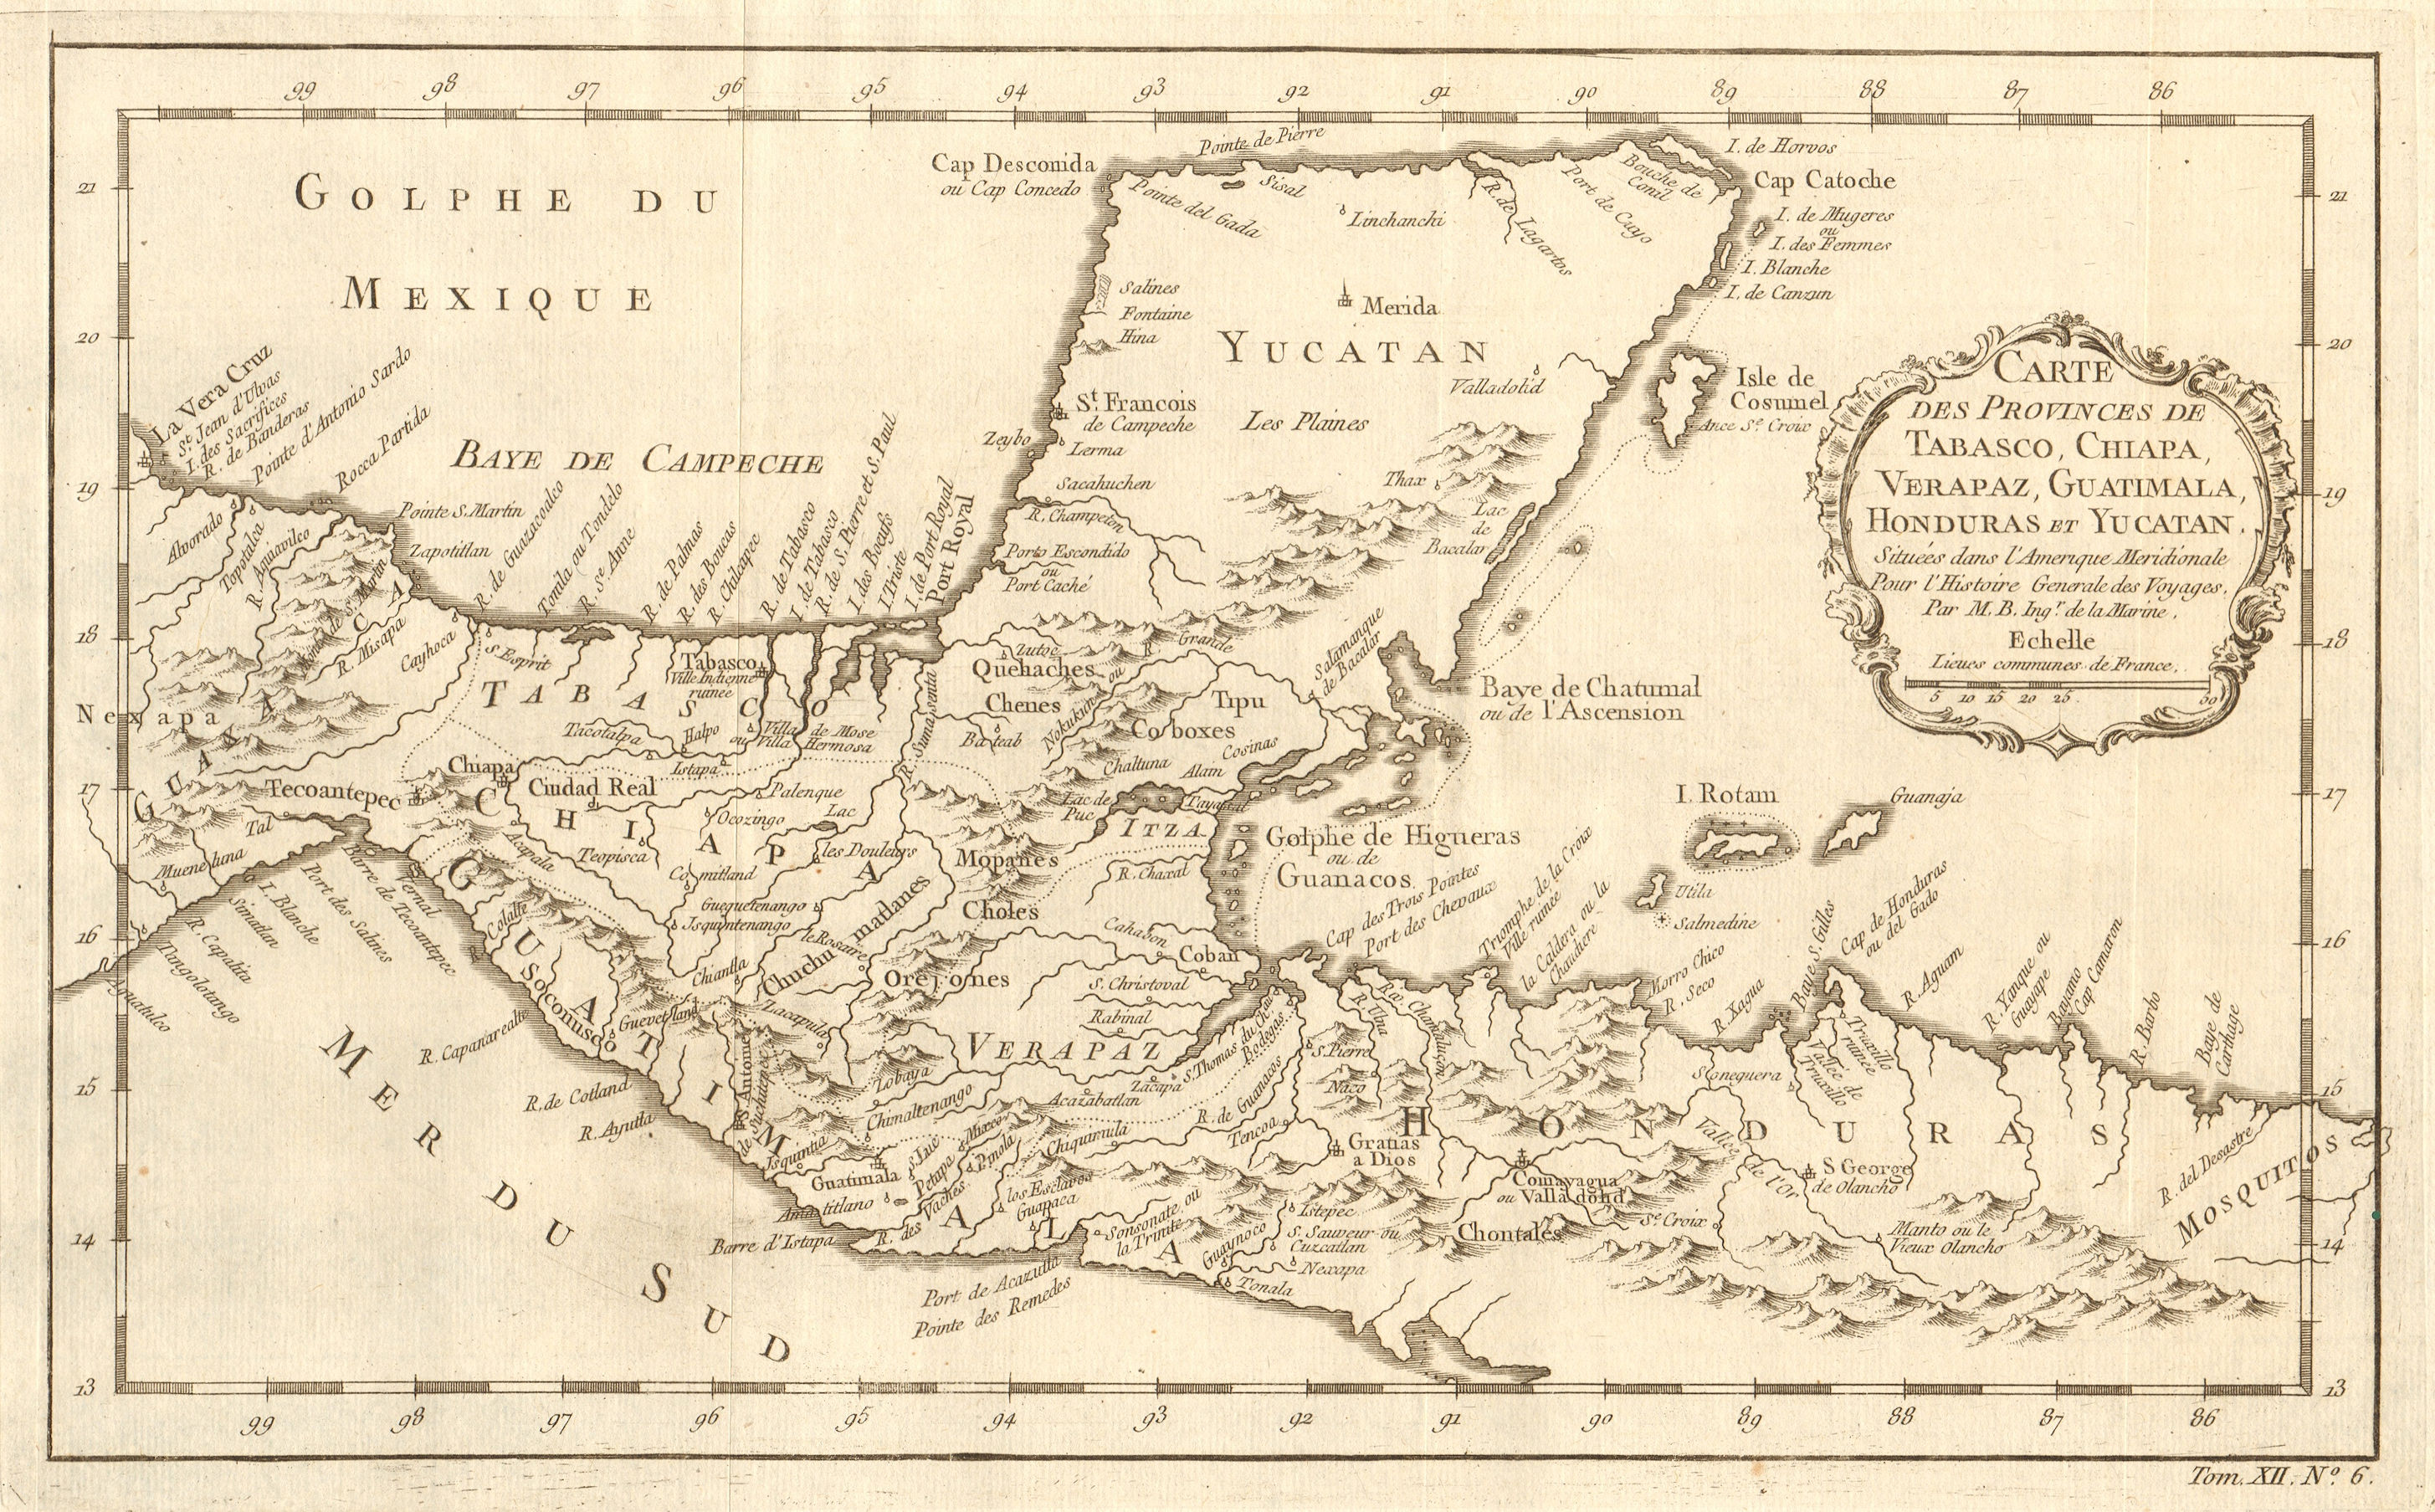 Associate Product 'Tabasco, Chiapa, Verapaz, Guatimala, Honduras & Yucatan' Mexico BELLIN 1754 map